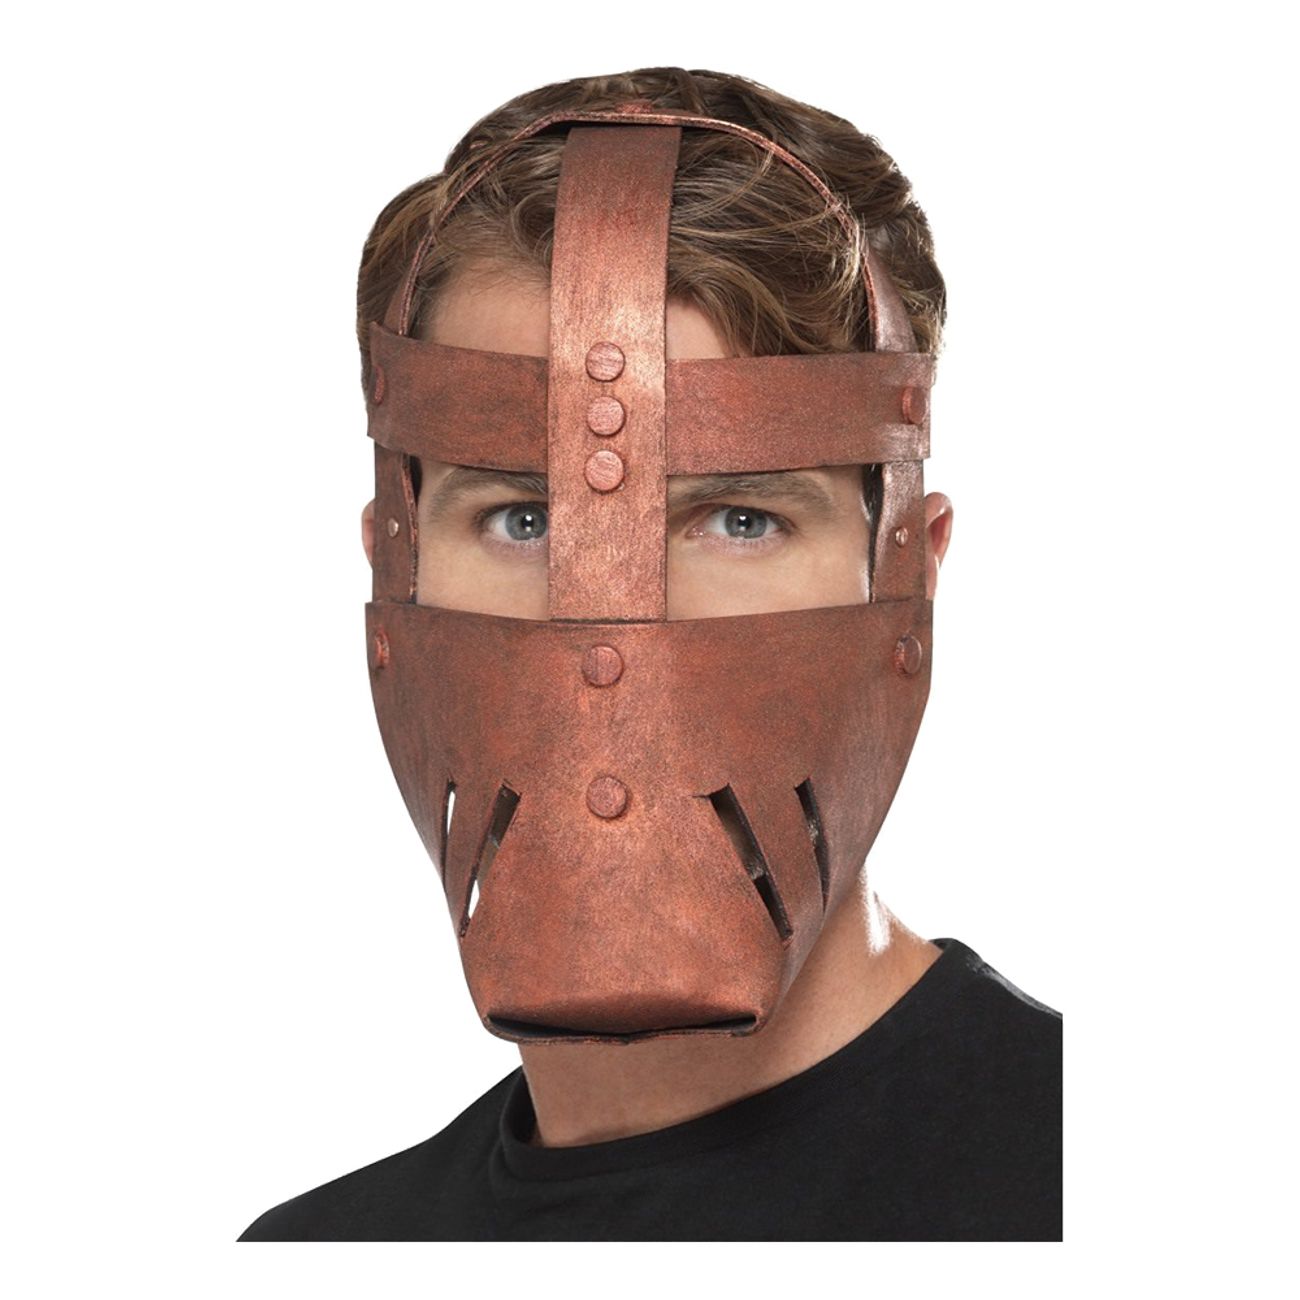 romersk-krigare-mask-brons-1